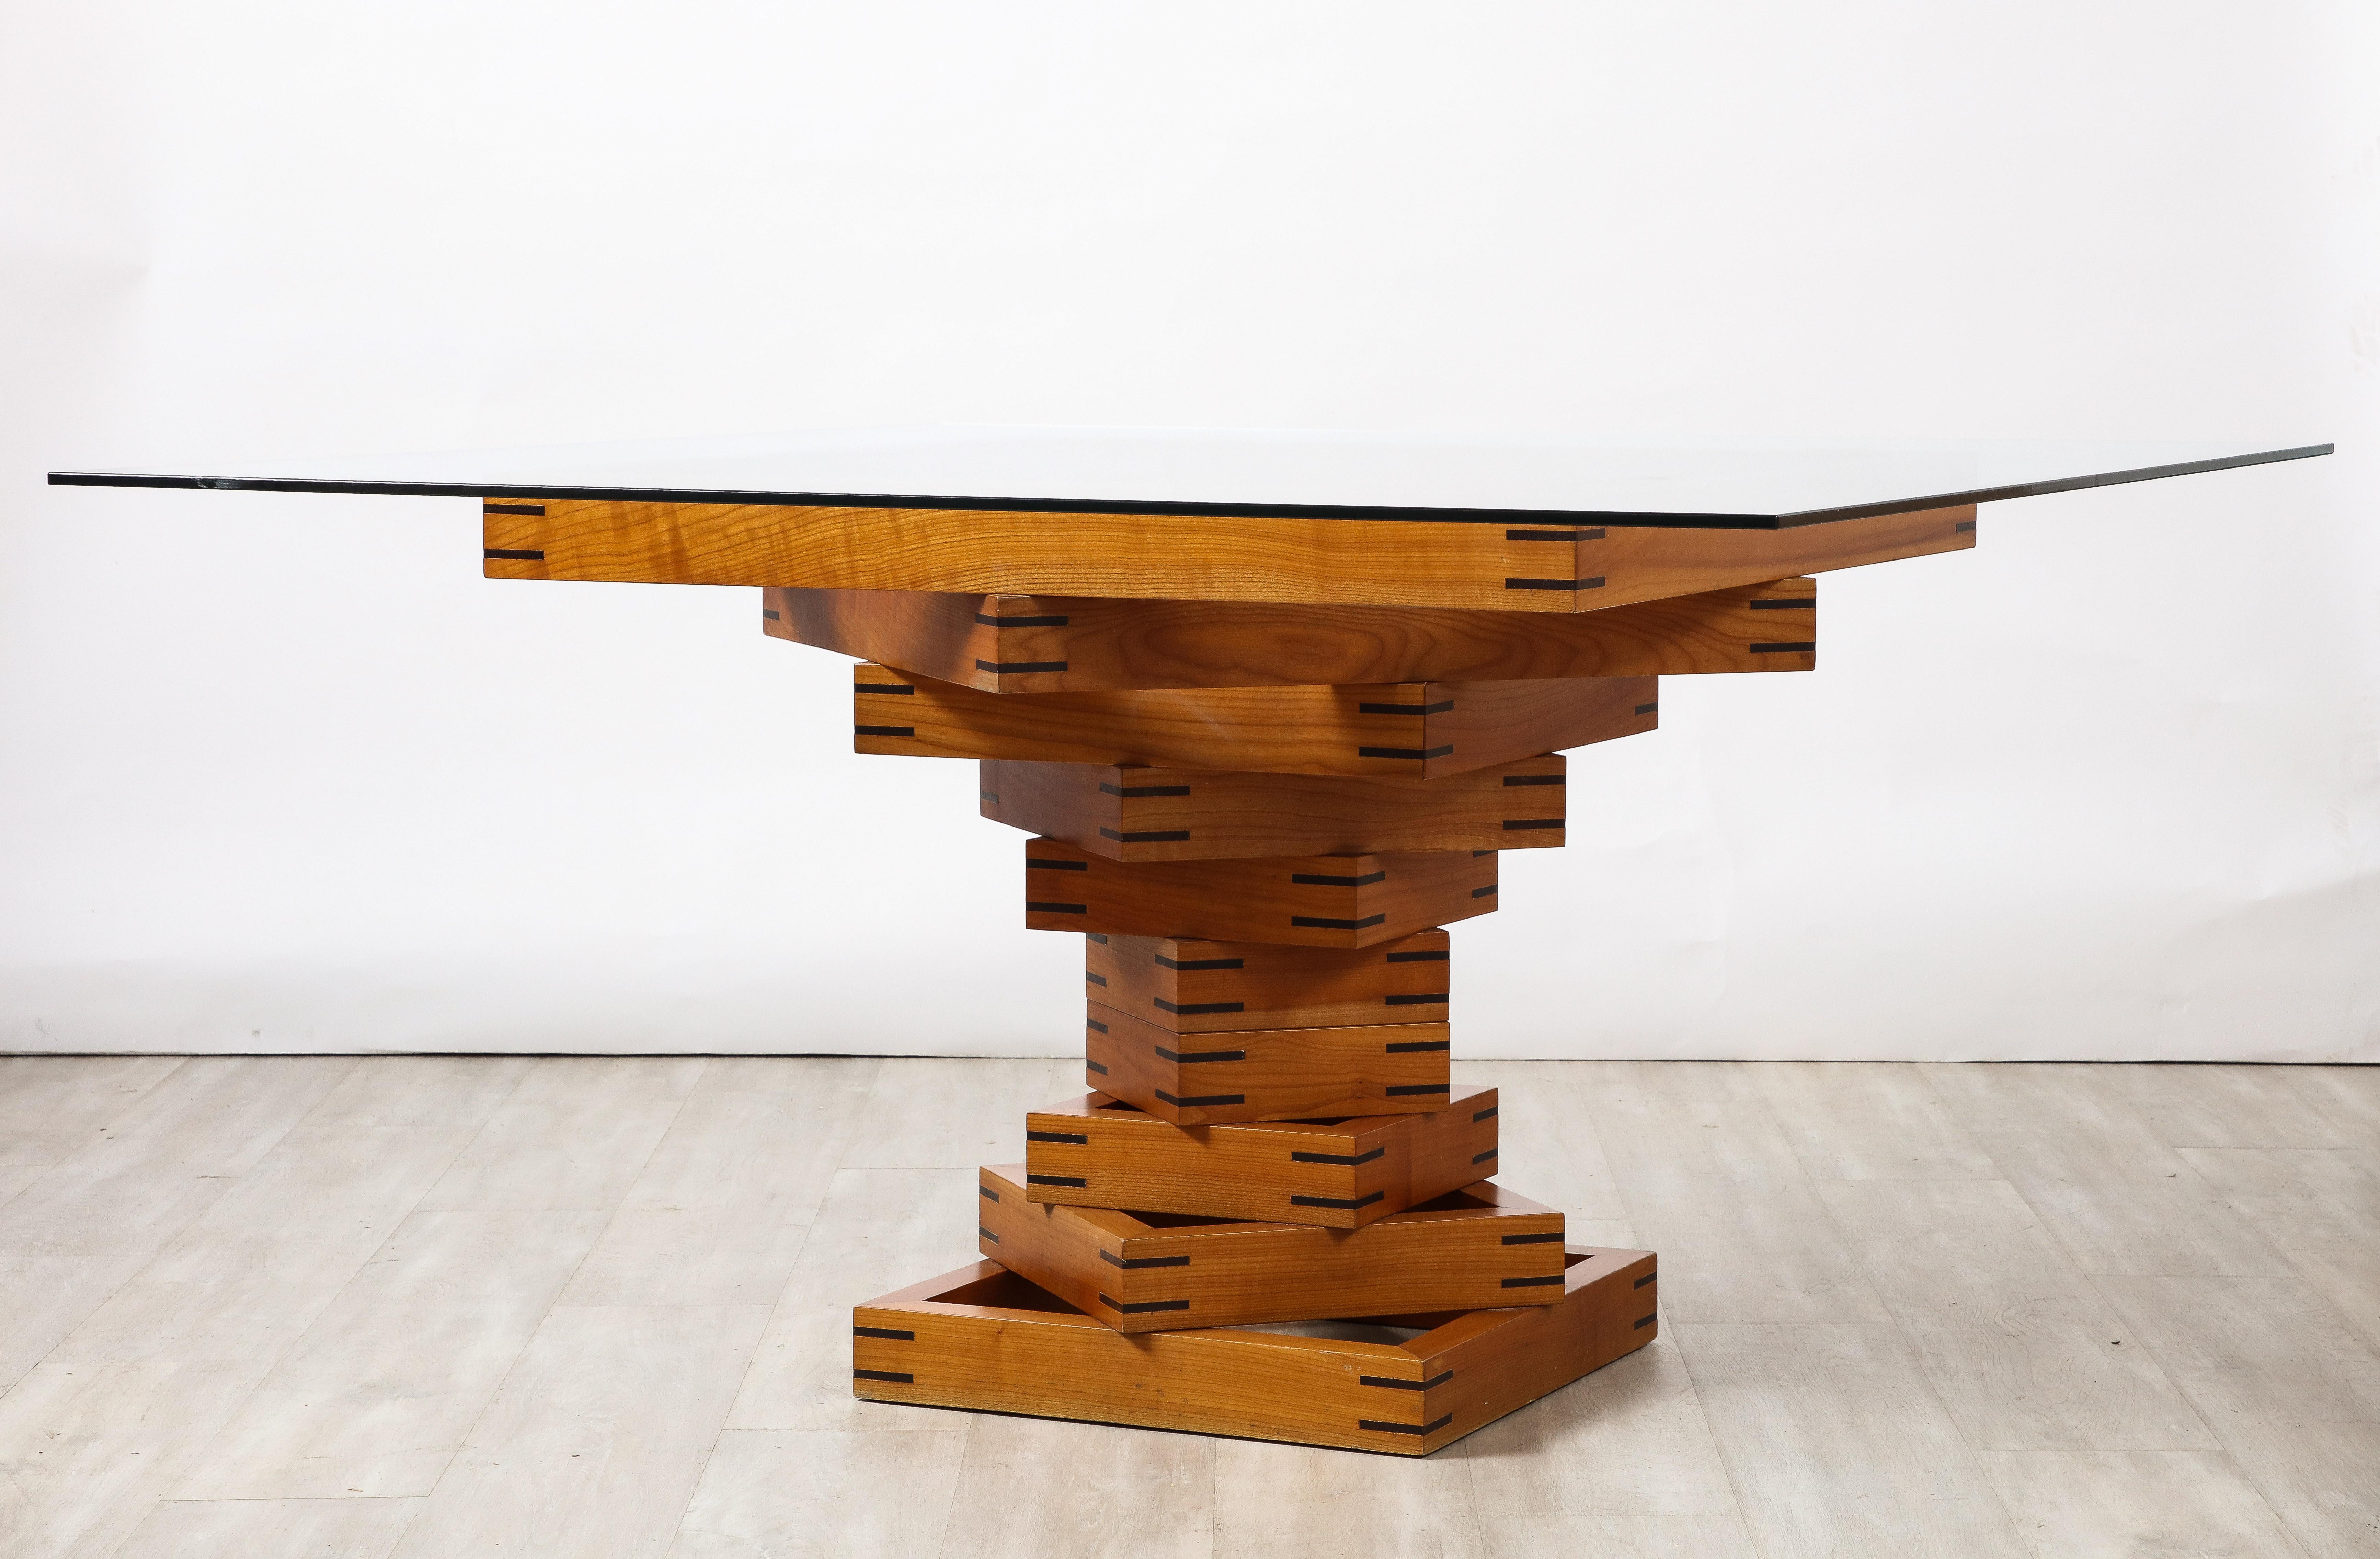  Ferdinando Meccani “Corinto” Dining Table Italy, 1978 For Sale 11